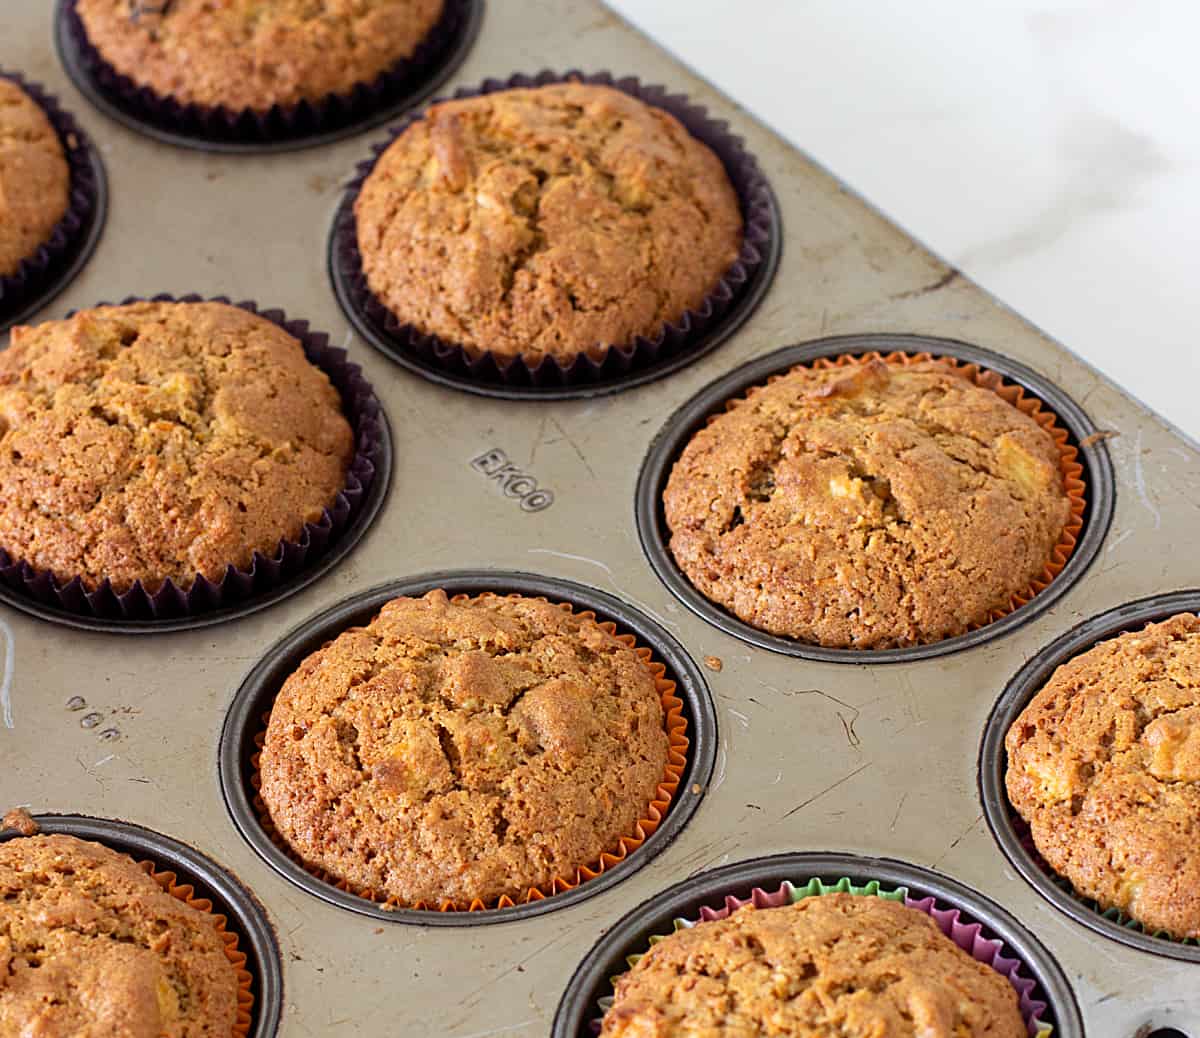 Baked muffins in grey metal pan